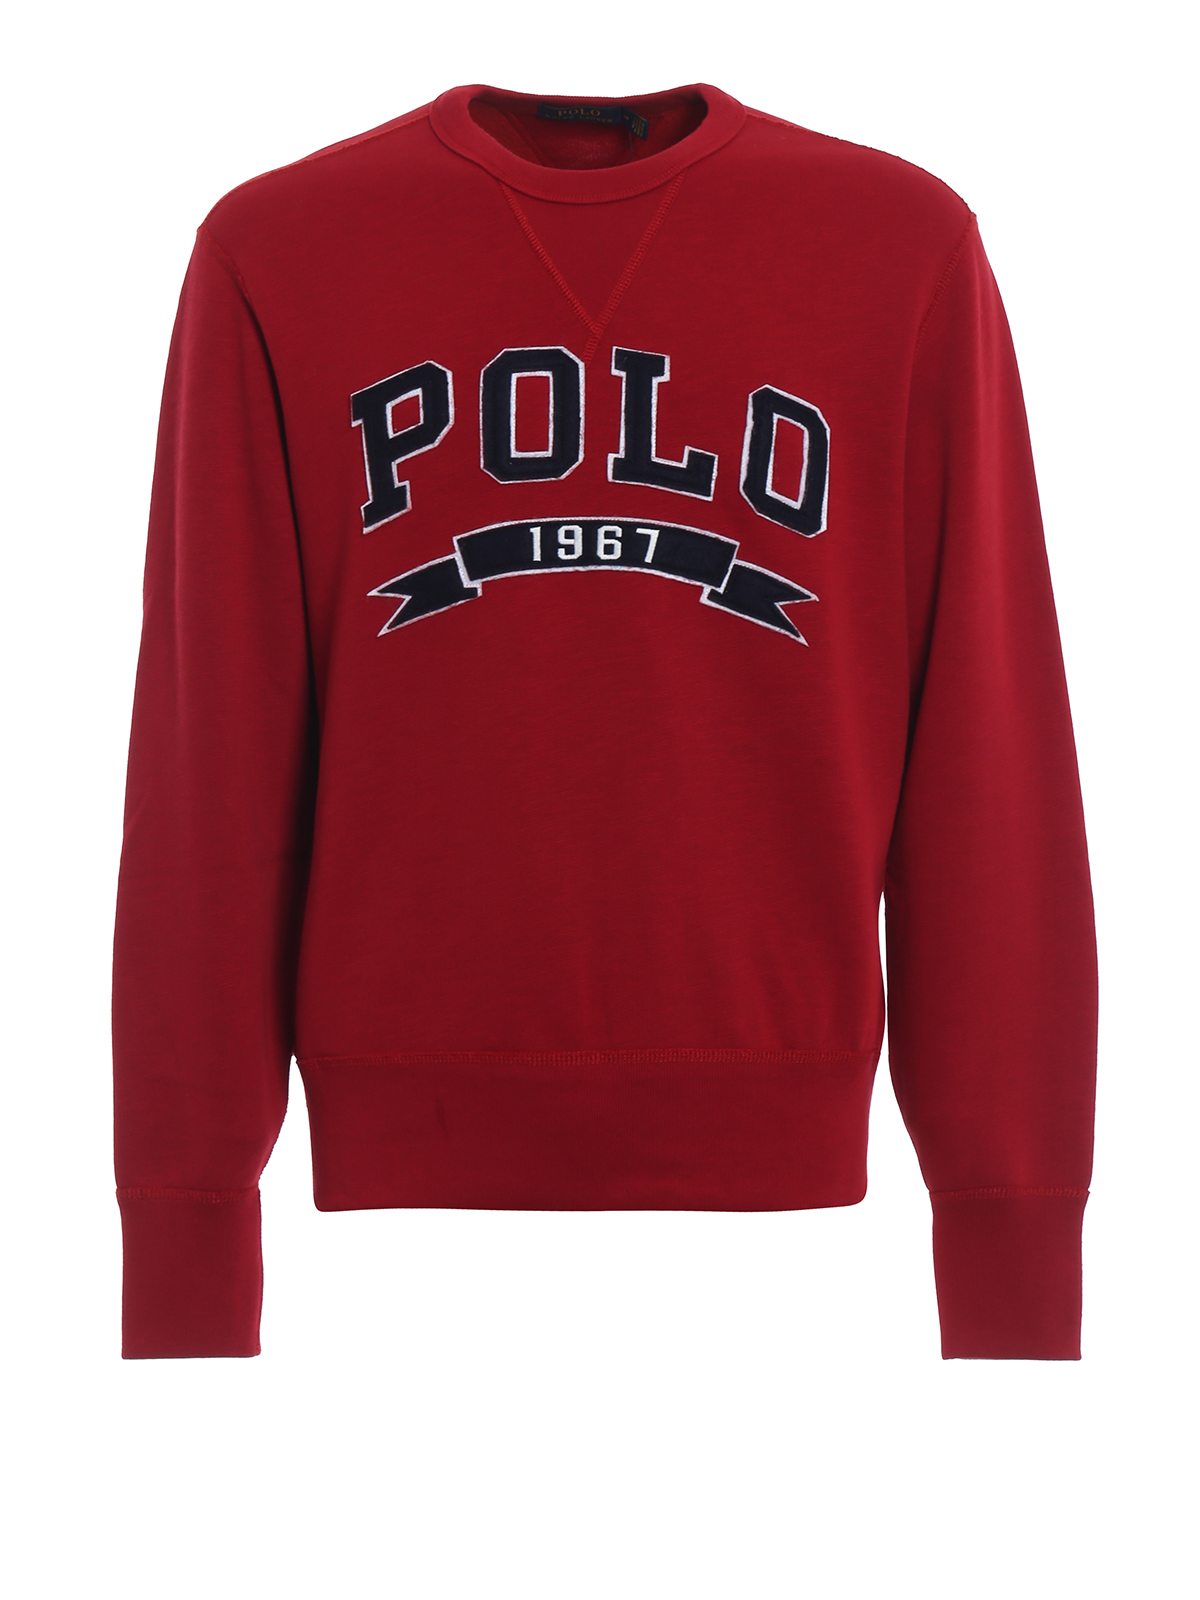 polo ralph lauren 1967 sweater